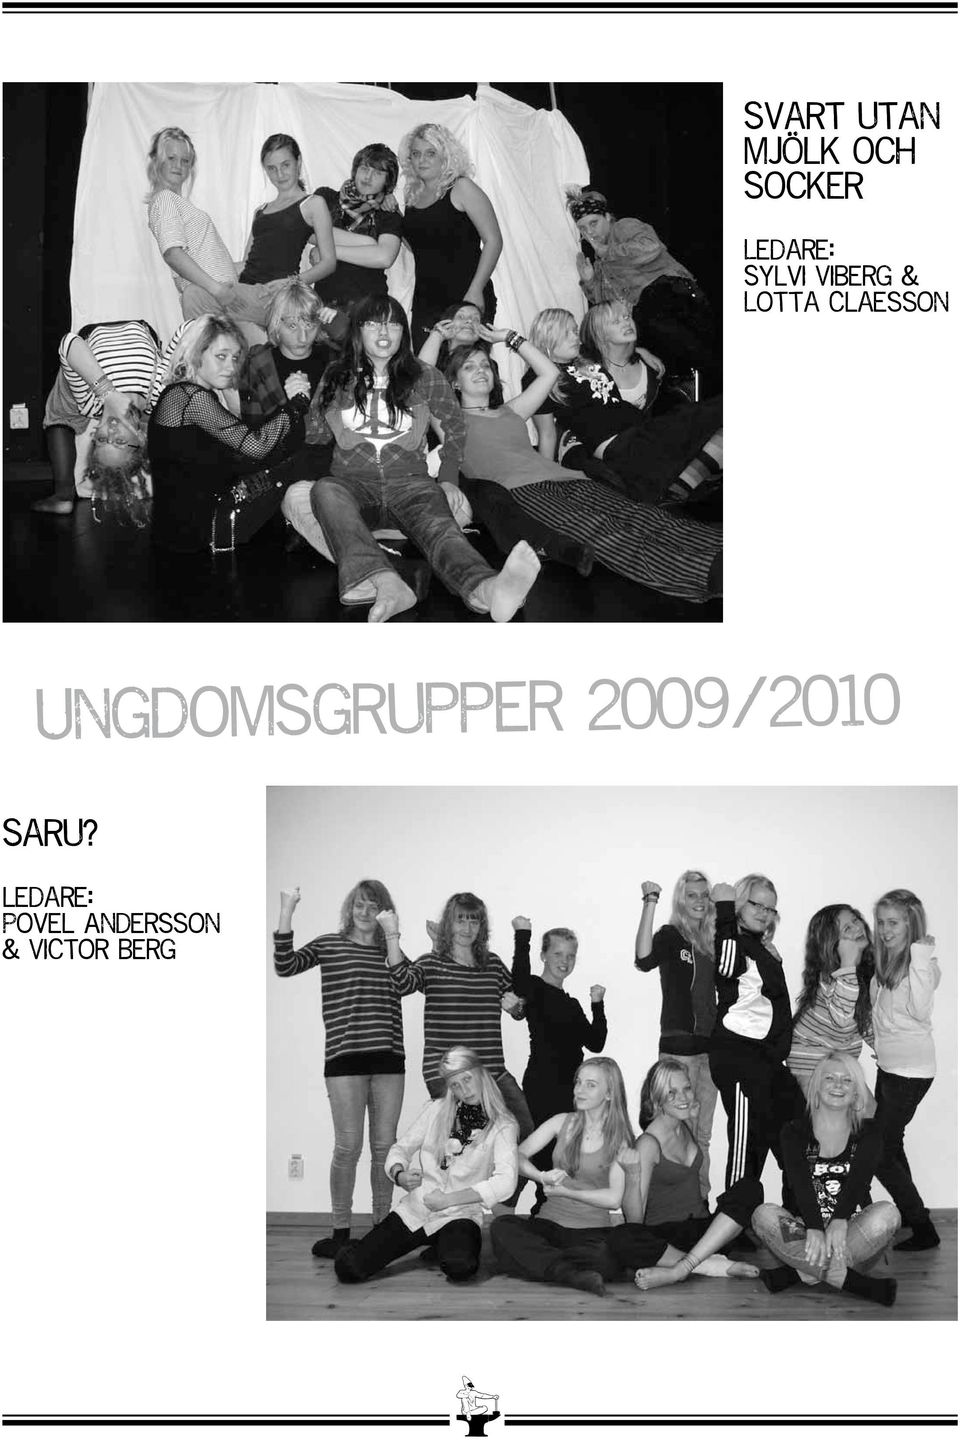 Claesson Ungdomsgrupper 2009/2010